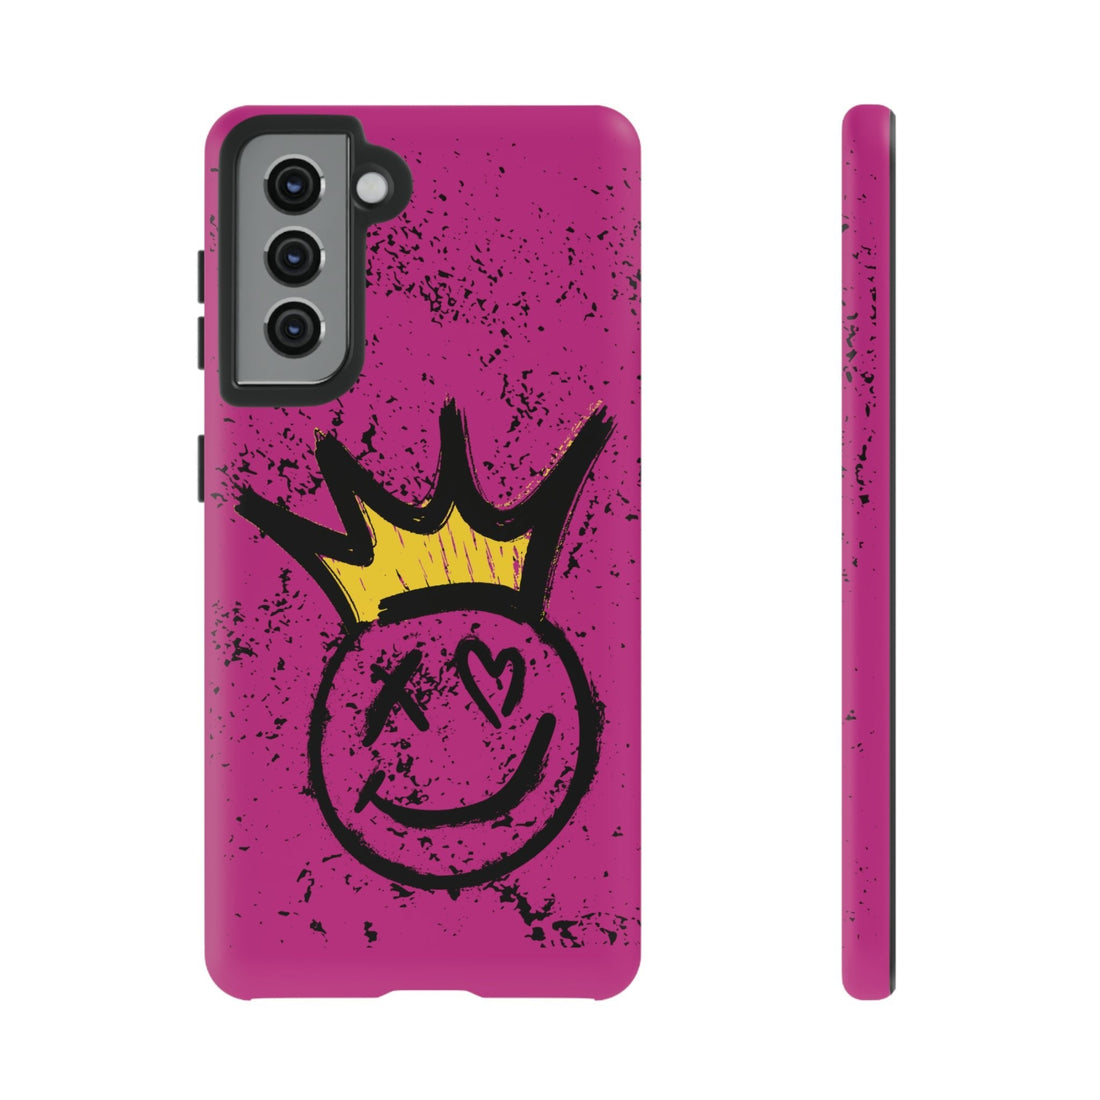 Graffiti Queen Tough Cases - Phone Case - Positively Sassy - Graffiti Queen Tough Cases